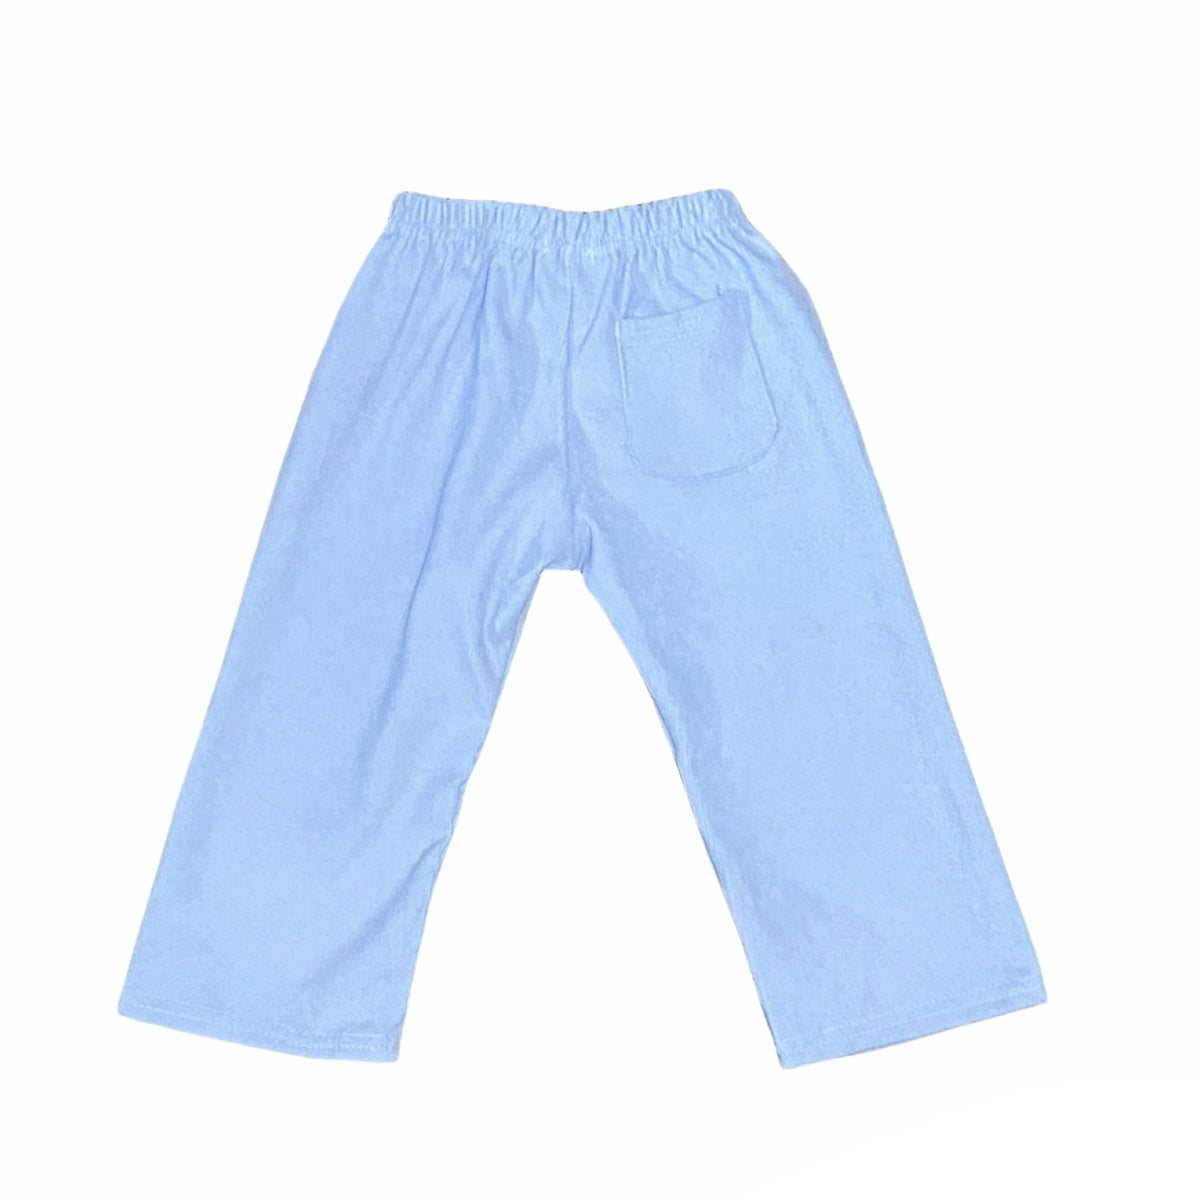 Boys Pants - Light Blue Corduroy